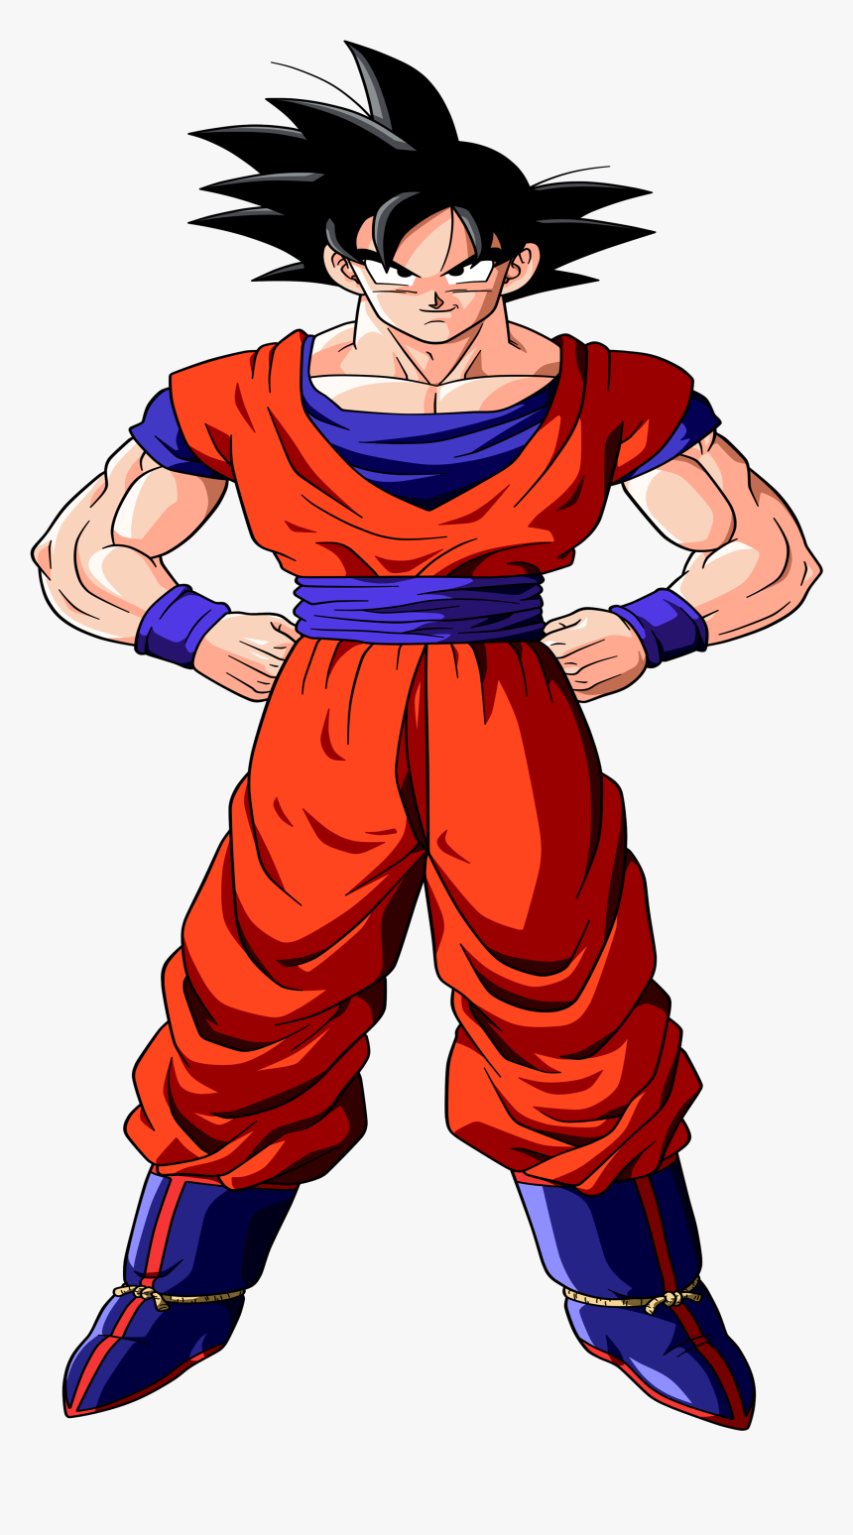 Best Goku normal form Background images for Phone